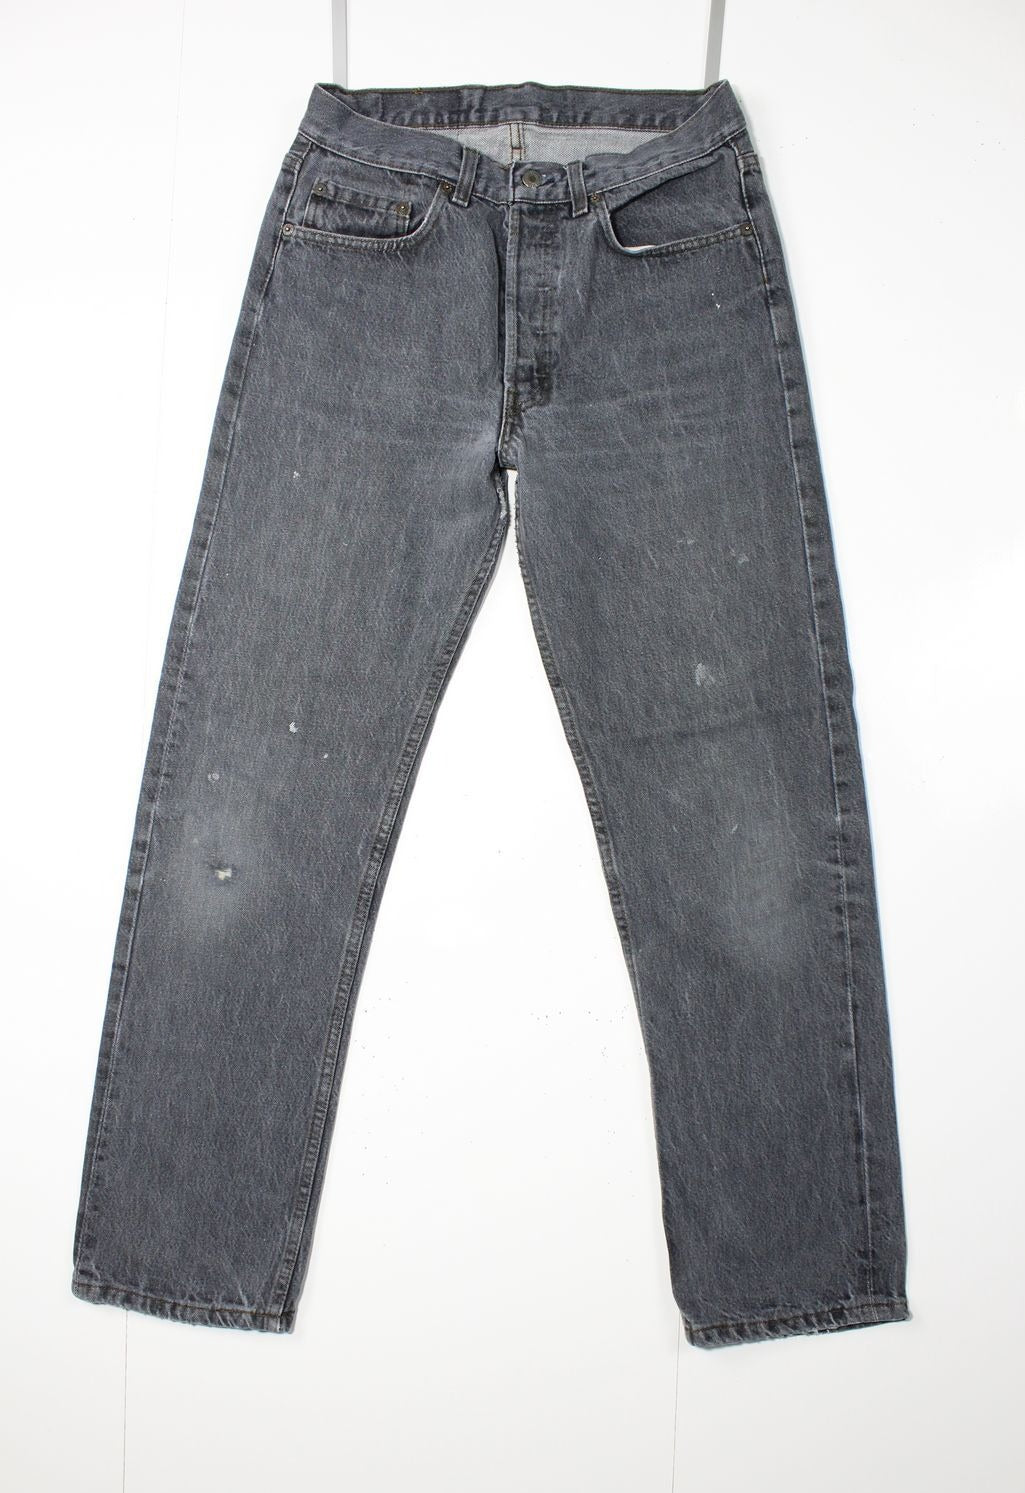 Levi's 501 Denim W32 L30 Made In USA Jeans Vintage